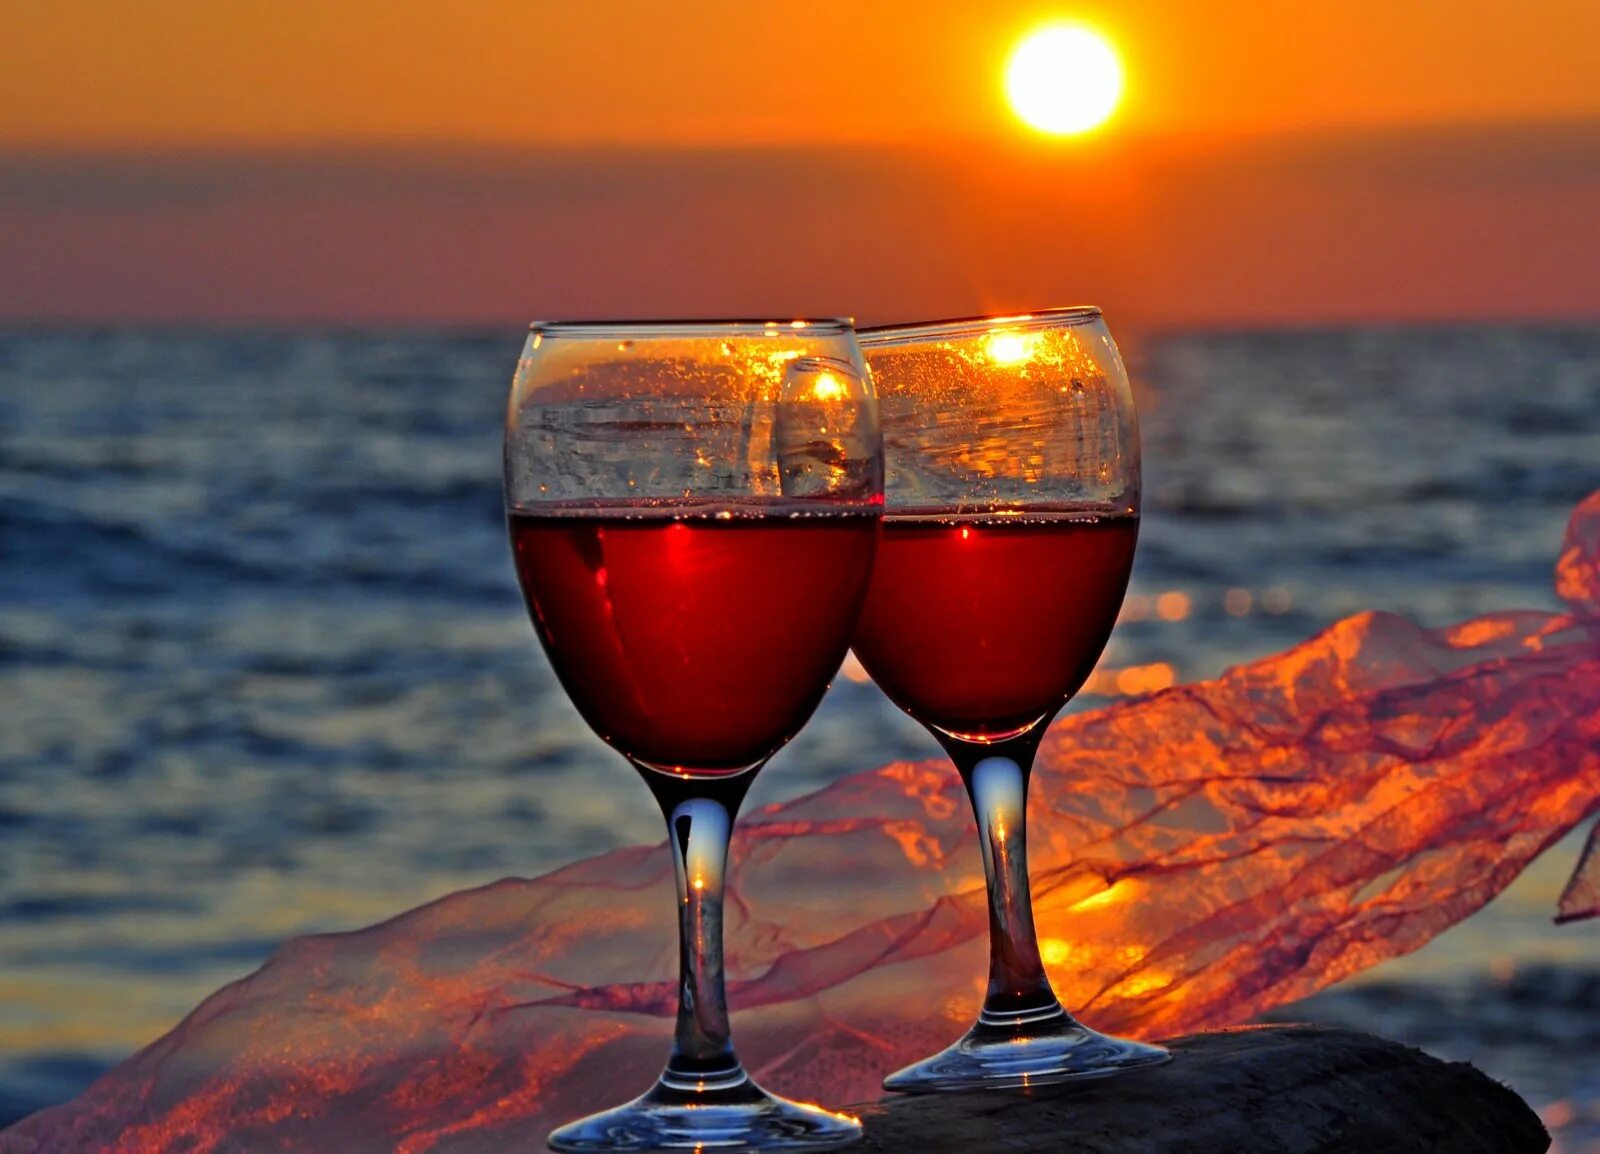 Вечер лучшее время. Бокал вина на закате. Добрый вечер у моря с вином. Вино и море. Море закат вино.